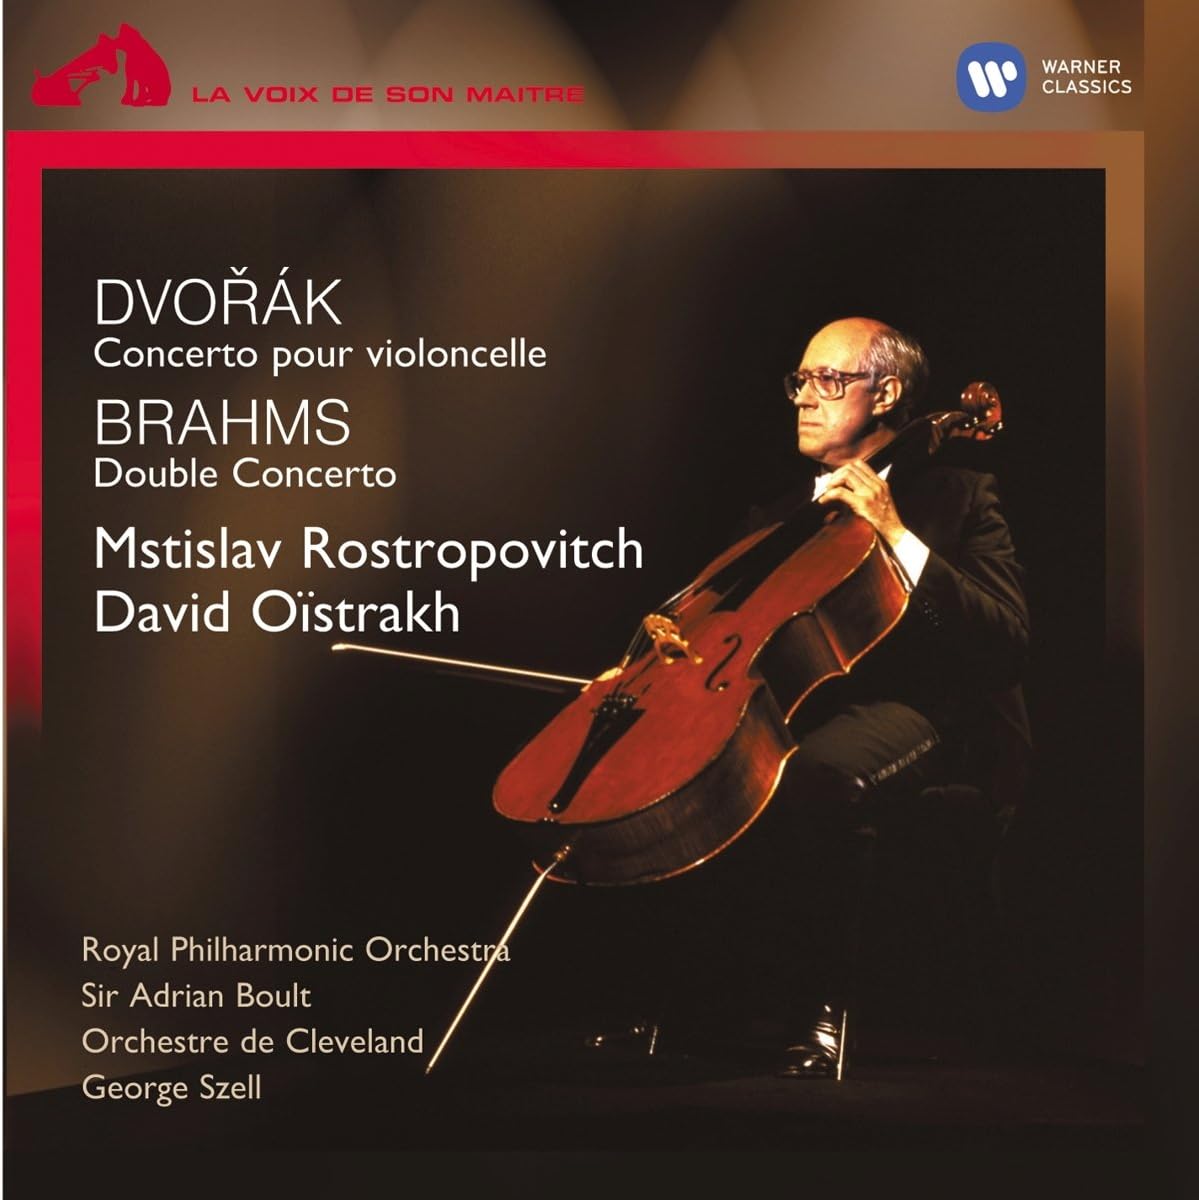 Dvorak: Concerto pour violoncelle / Brahms: Double Concerto | Mstislav Rostropovich, David Oistrakh, Adrian Boult